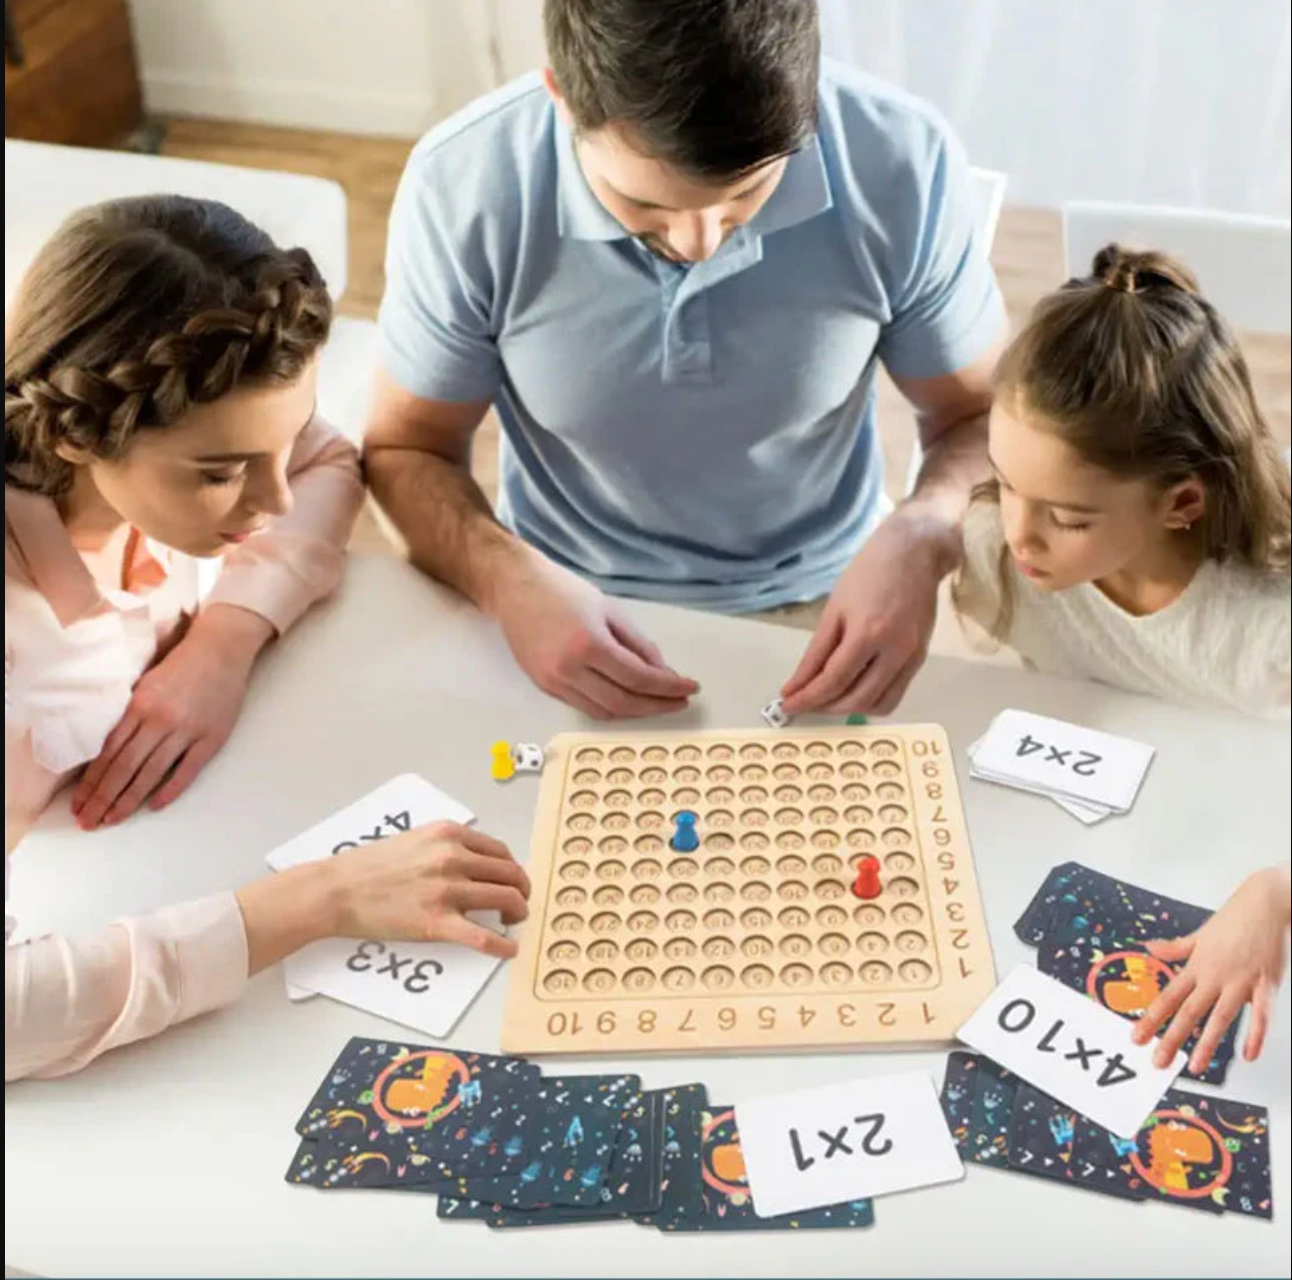 Montessori Wooden Multiplication Board Game